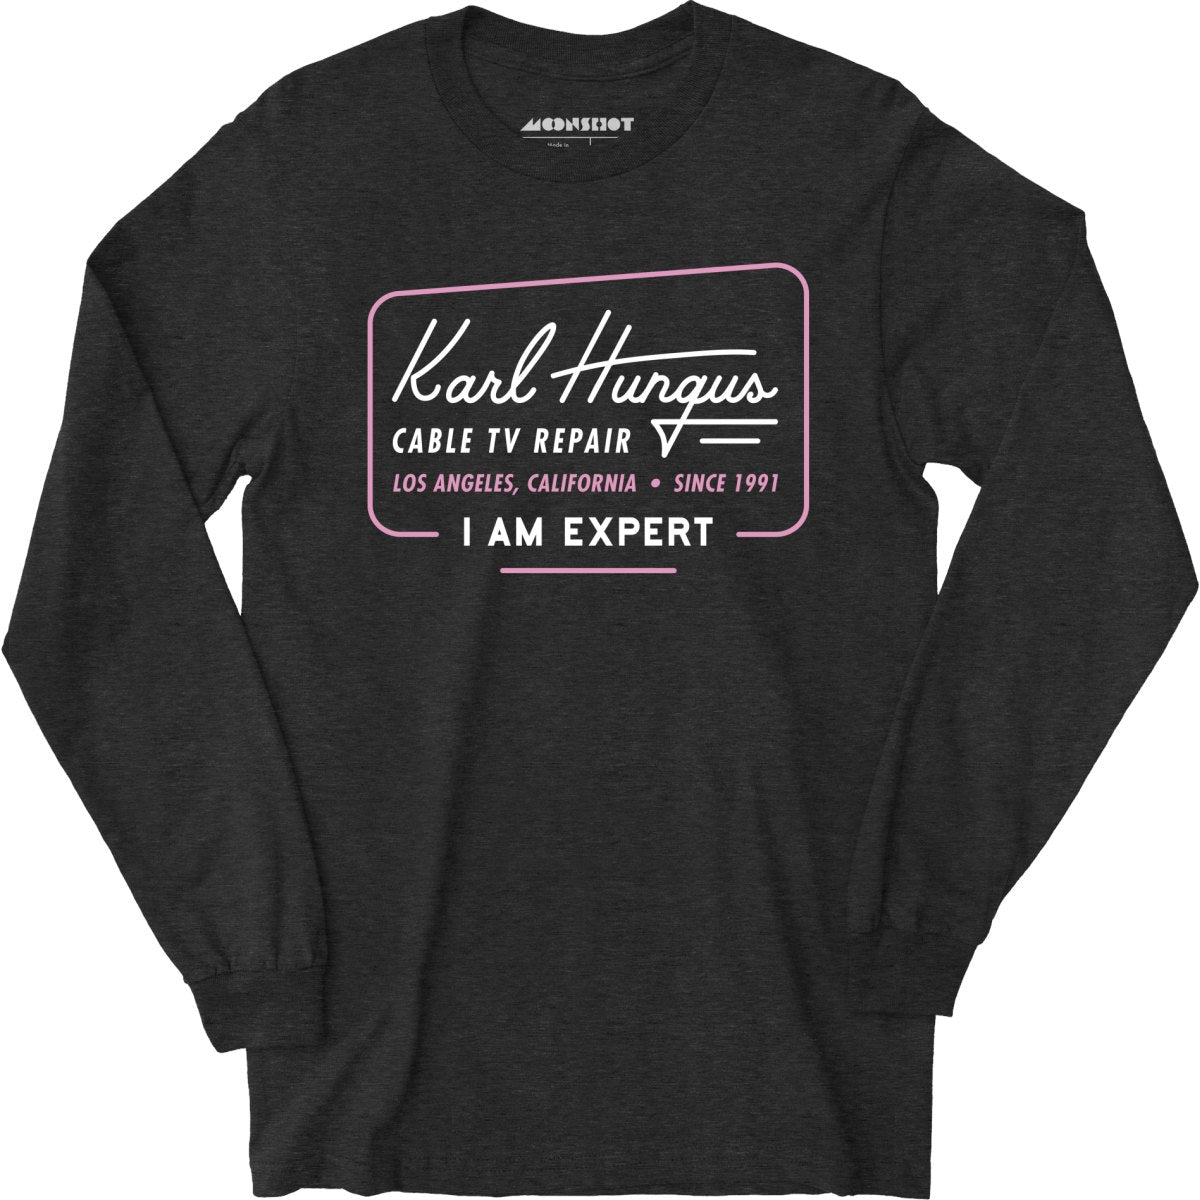 Karl Hungus Cable TV Repair - I am Expert - Long Sleeve T-Shirt